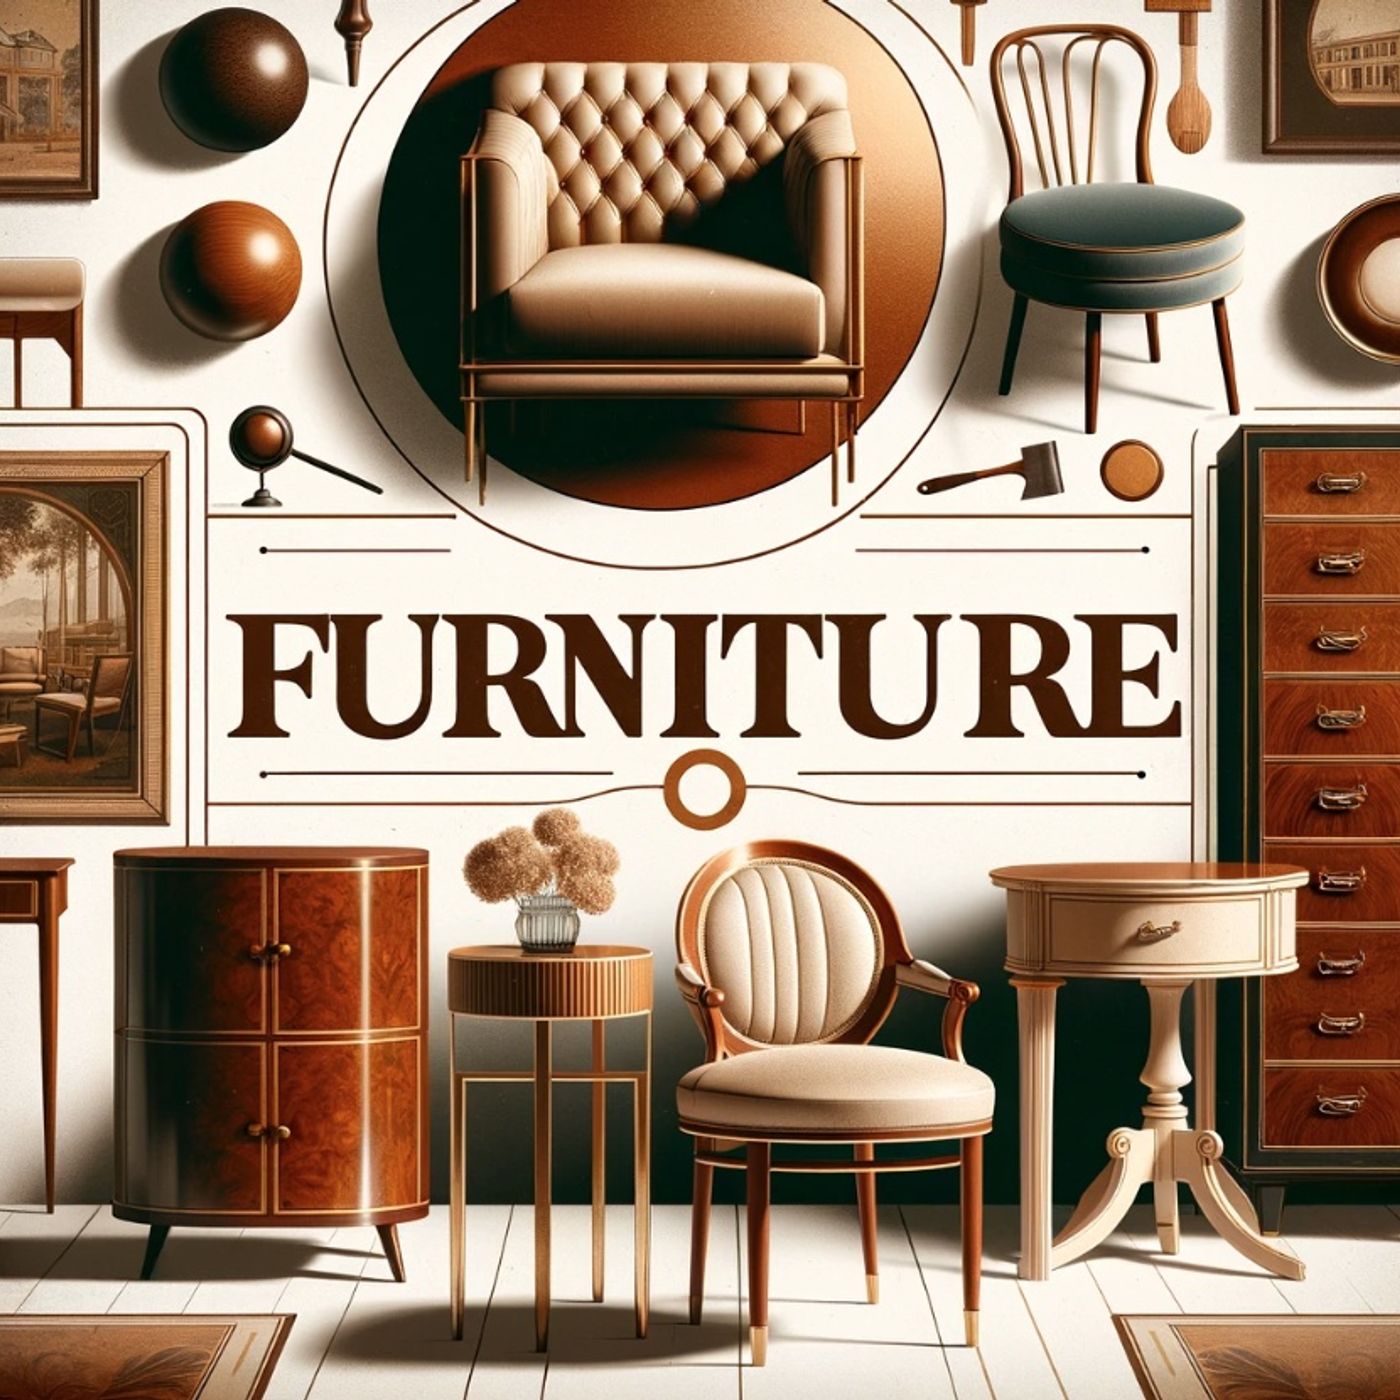 Furniture Image